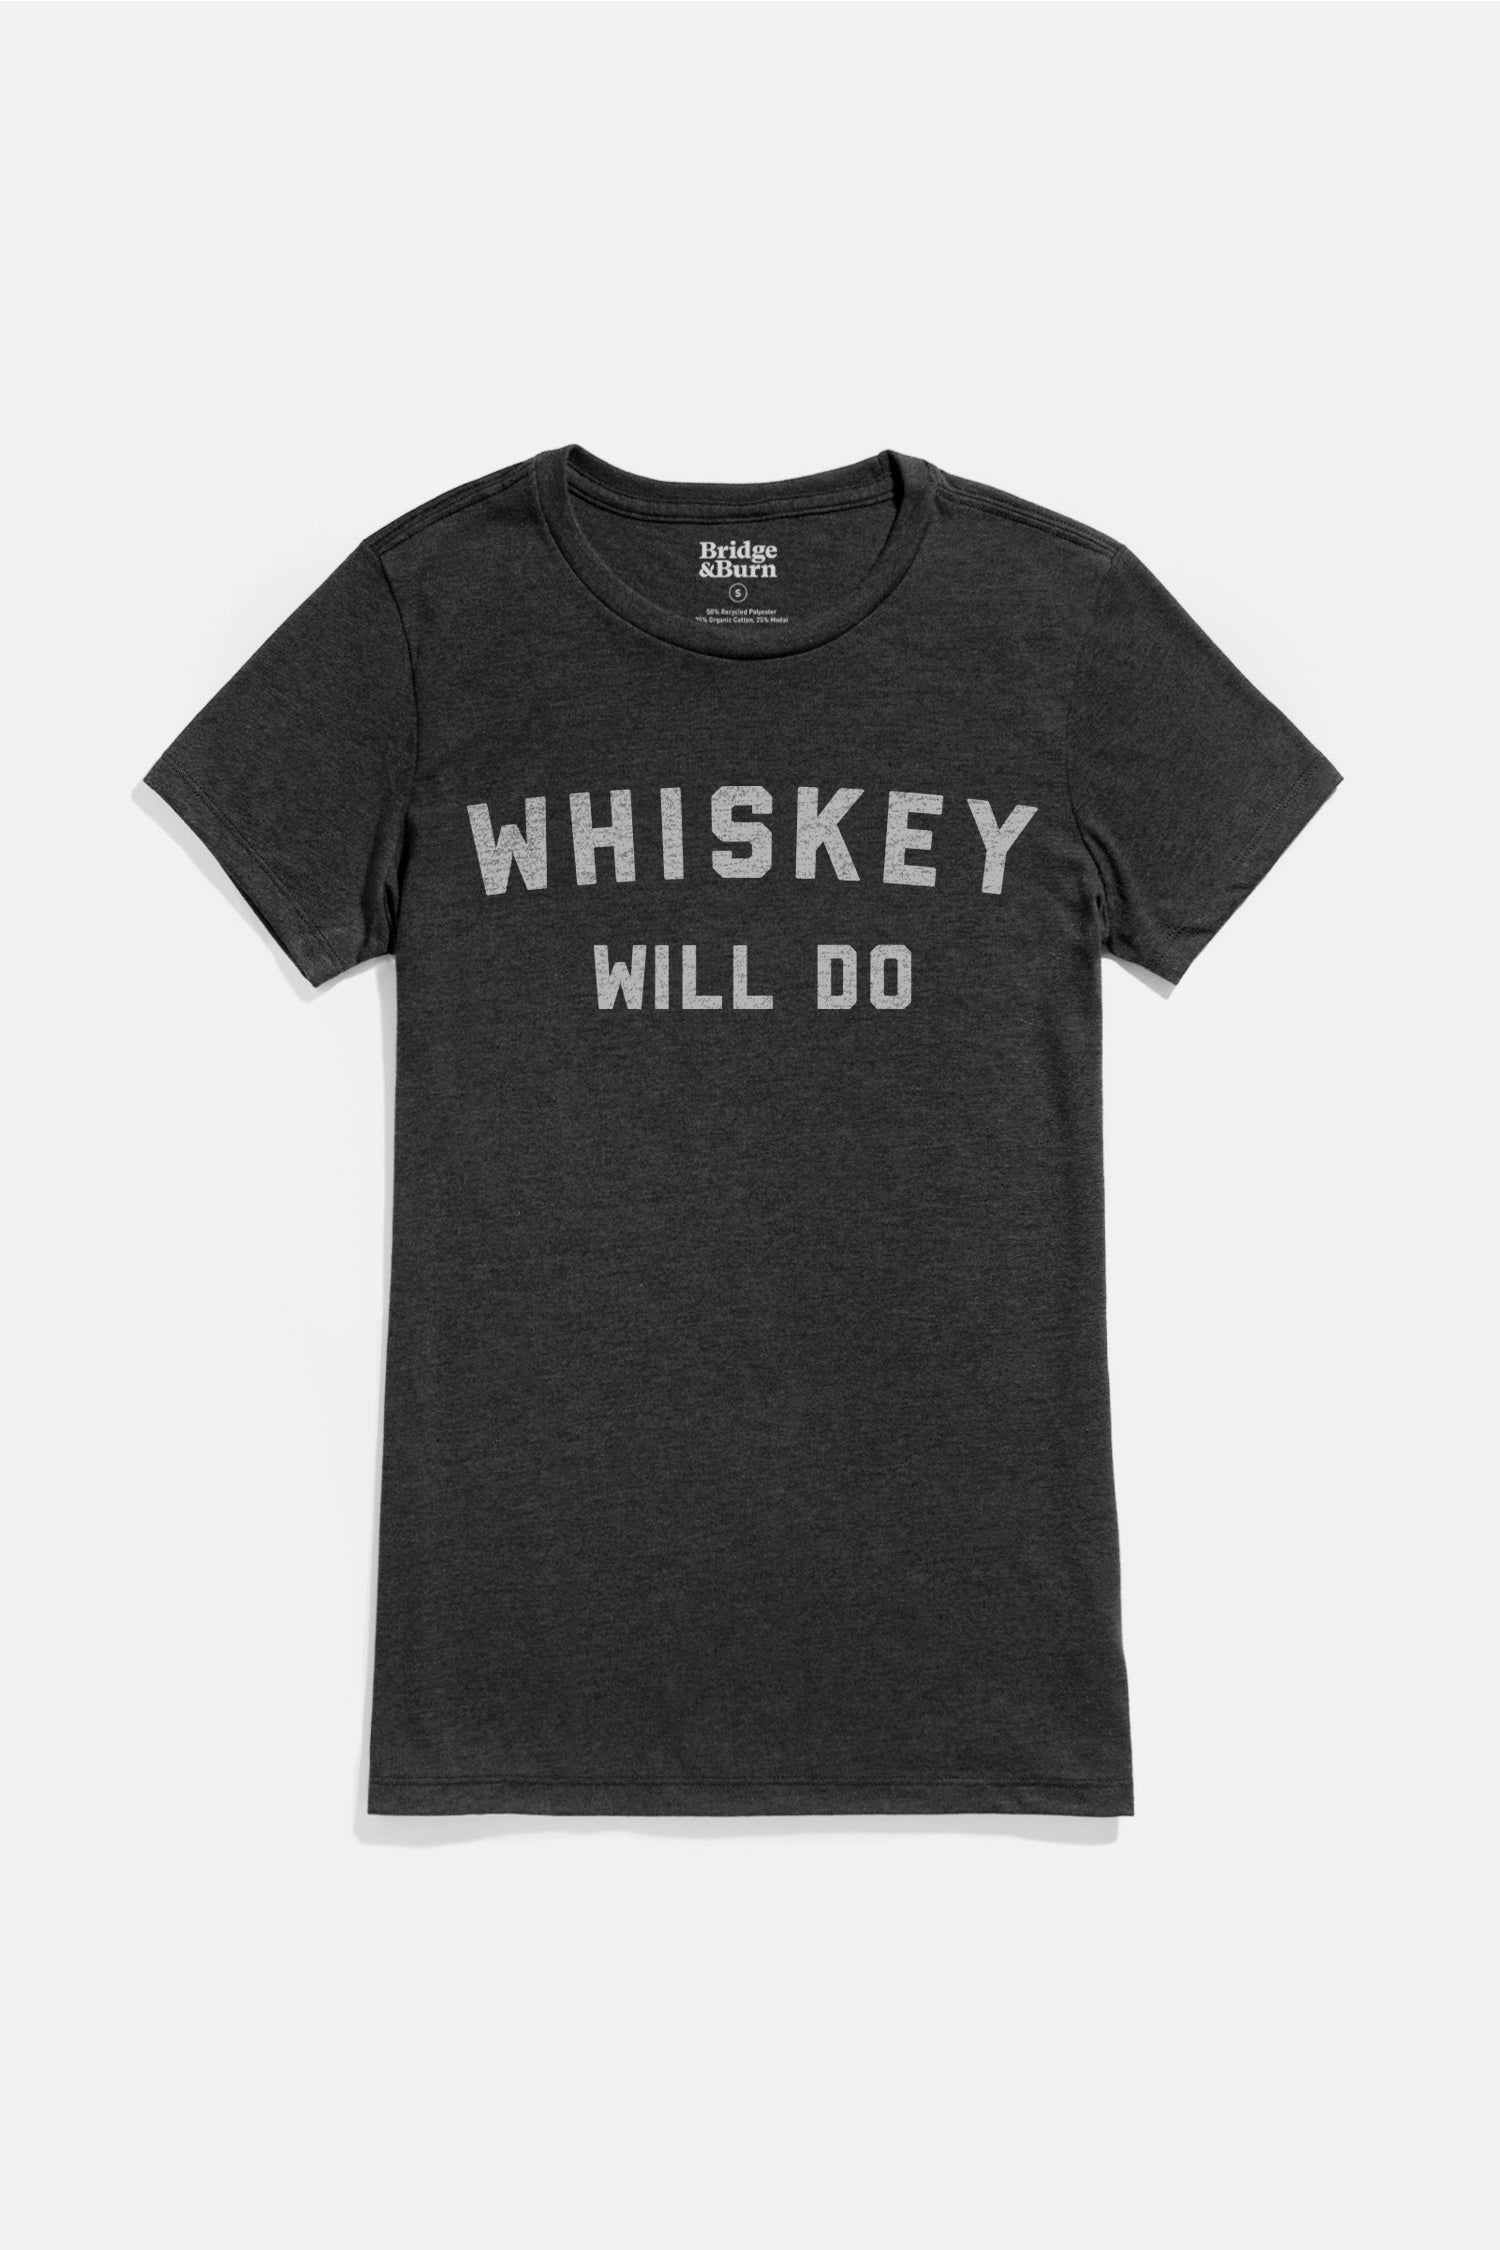 Women's Whiskey Will Do Tee / Black